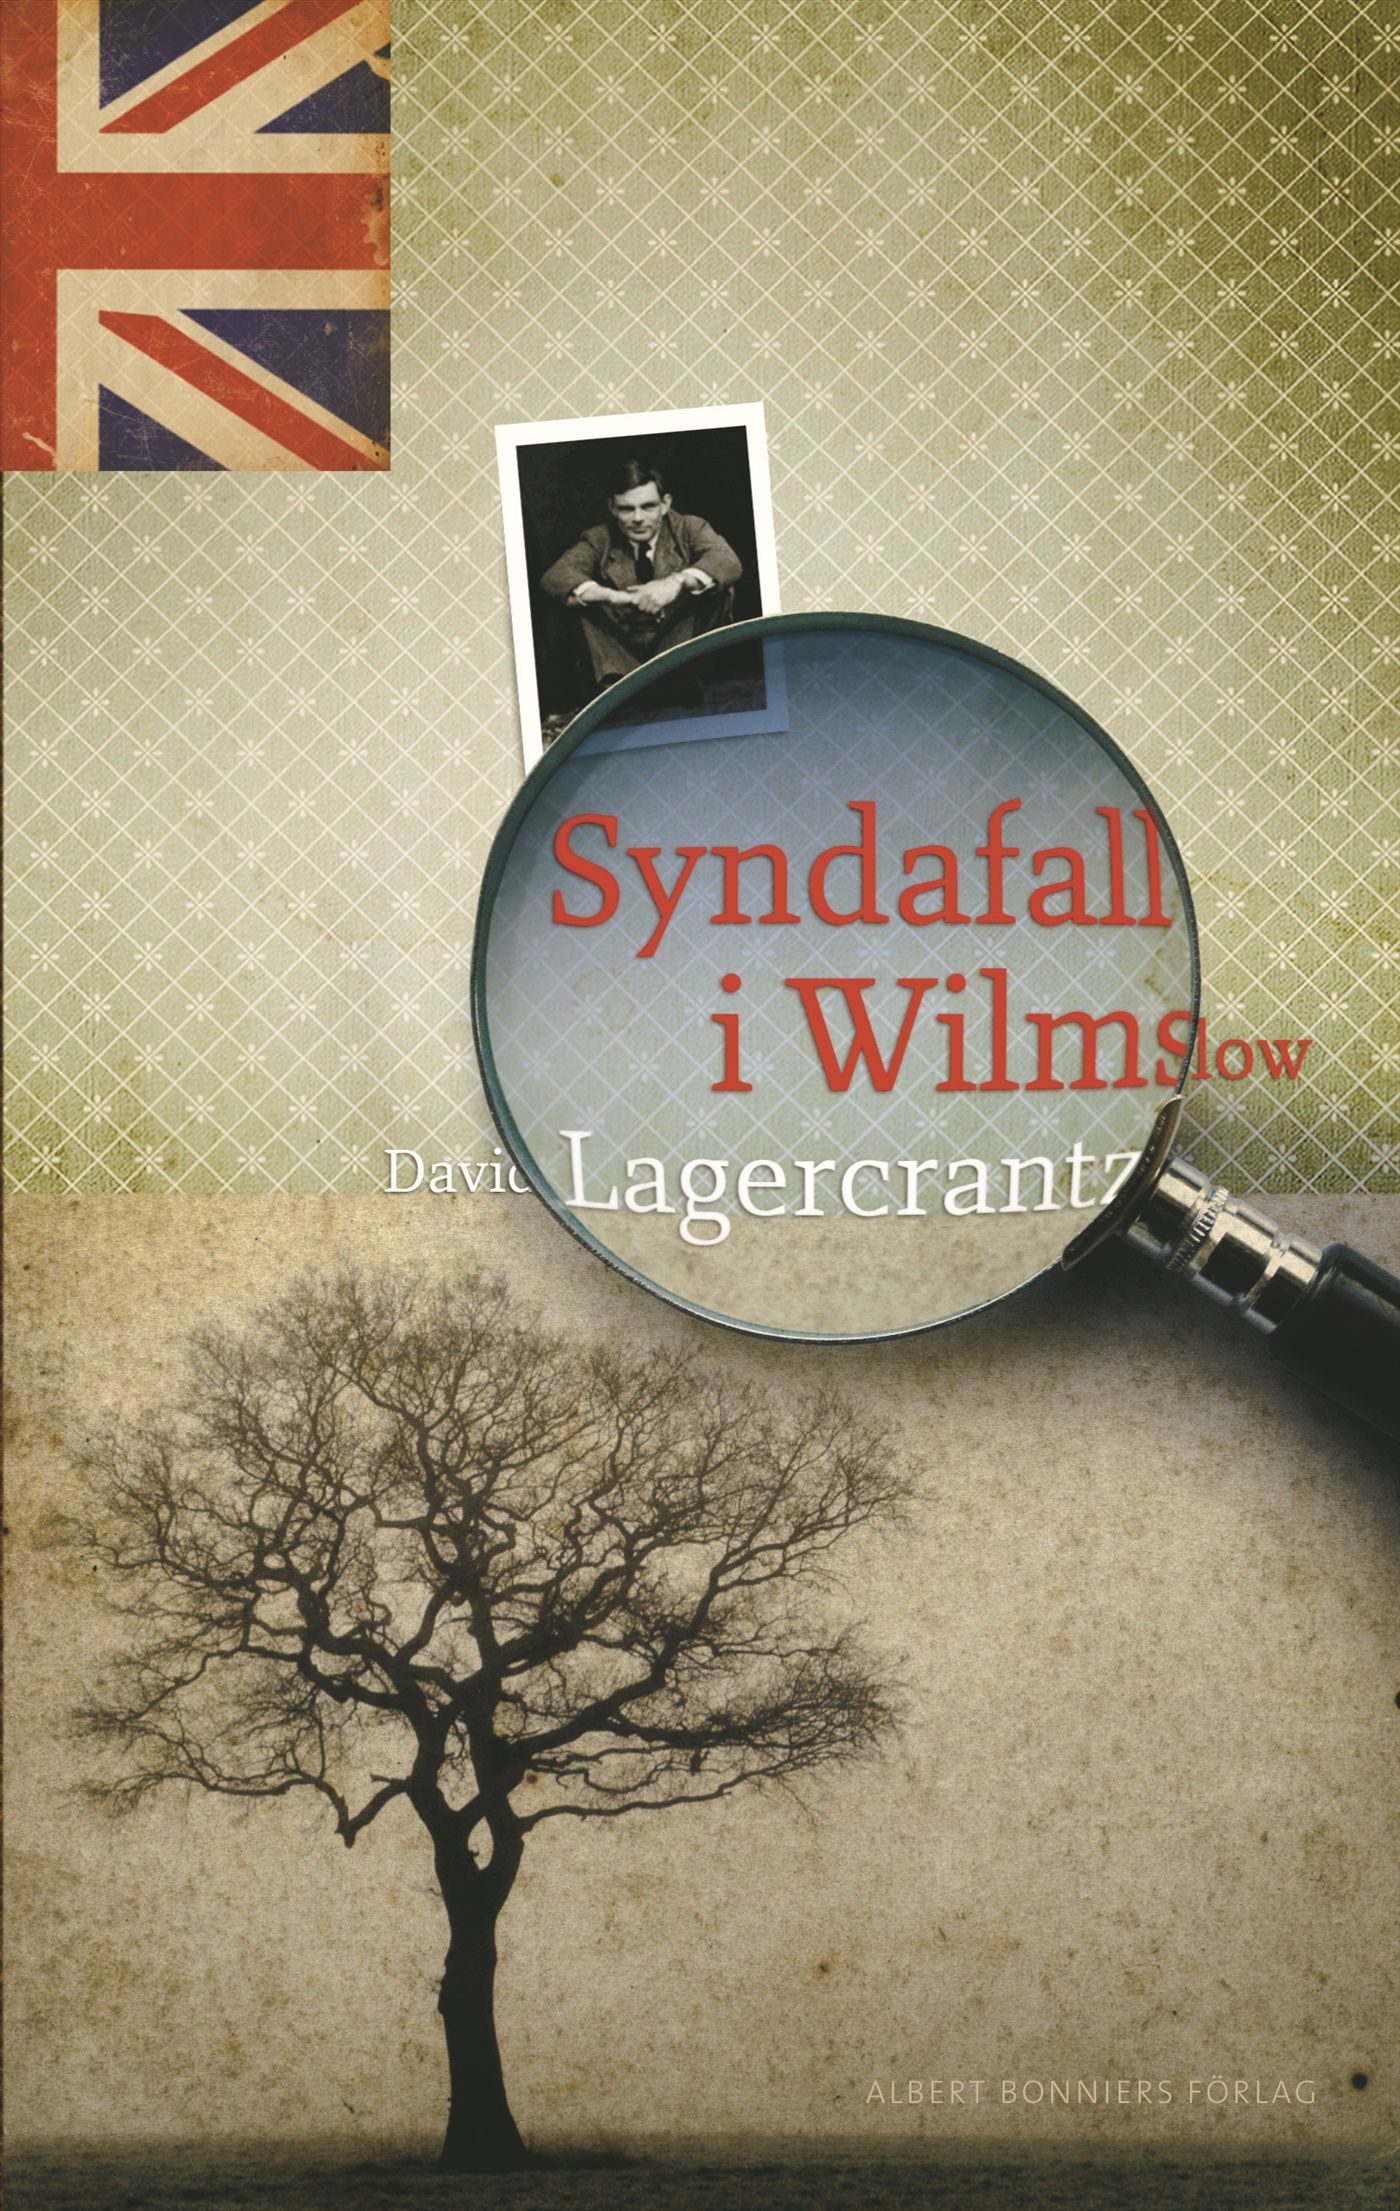 Syndafall i Wilmslow, eBook by David Lagercrantz